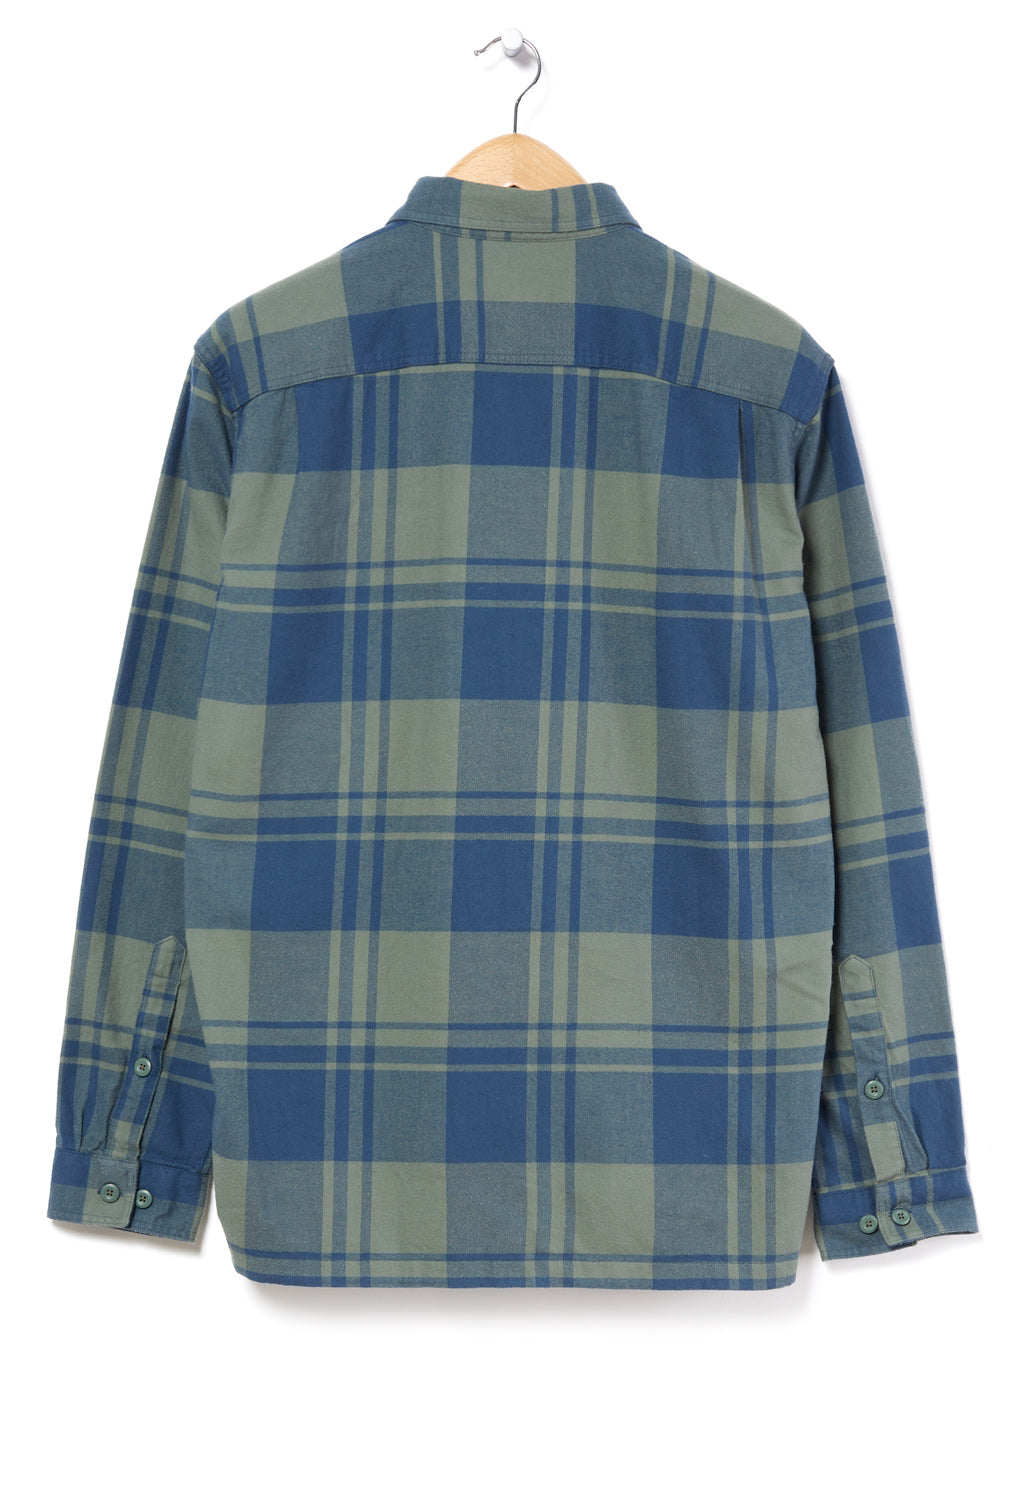 Patagonia Men's Organic Long Sleeve Flannel Shirt - Hemlock Green/Live Oak